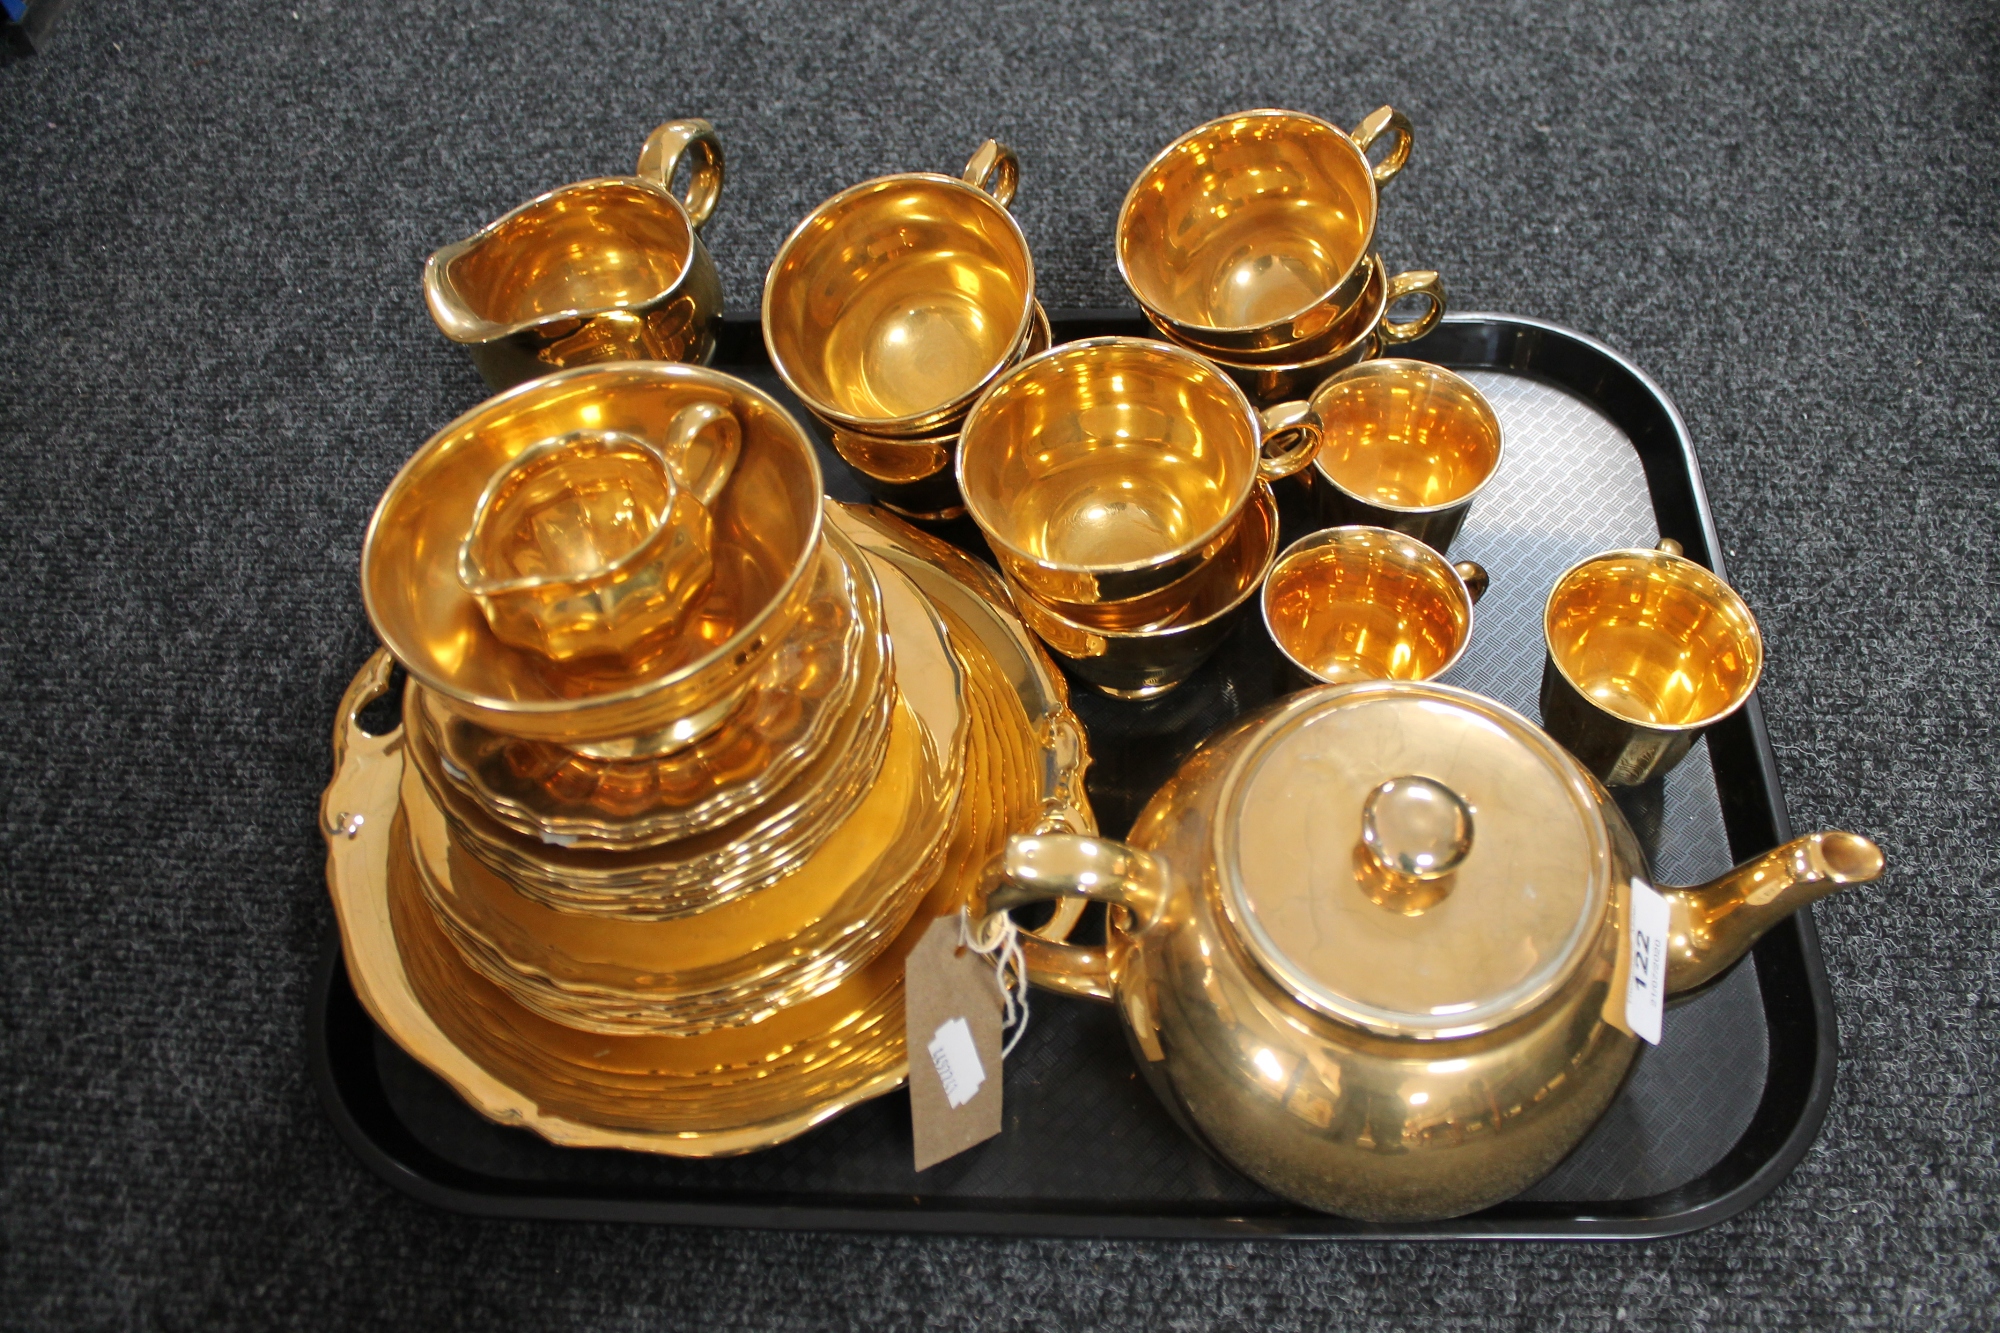 A tray of Royal Winton gilded tea china